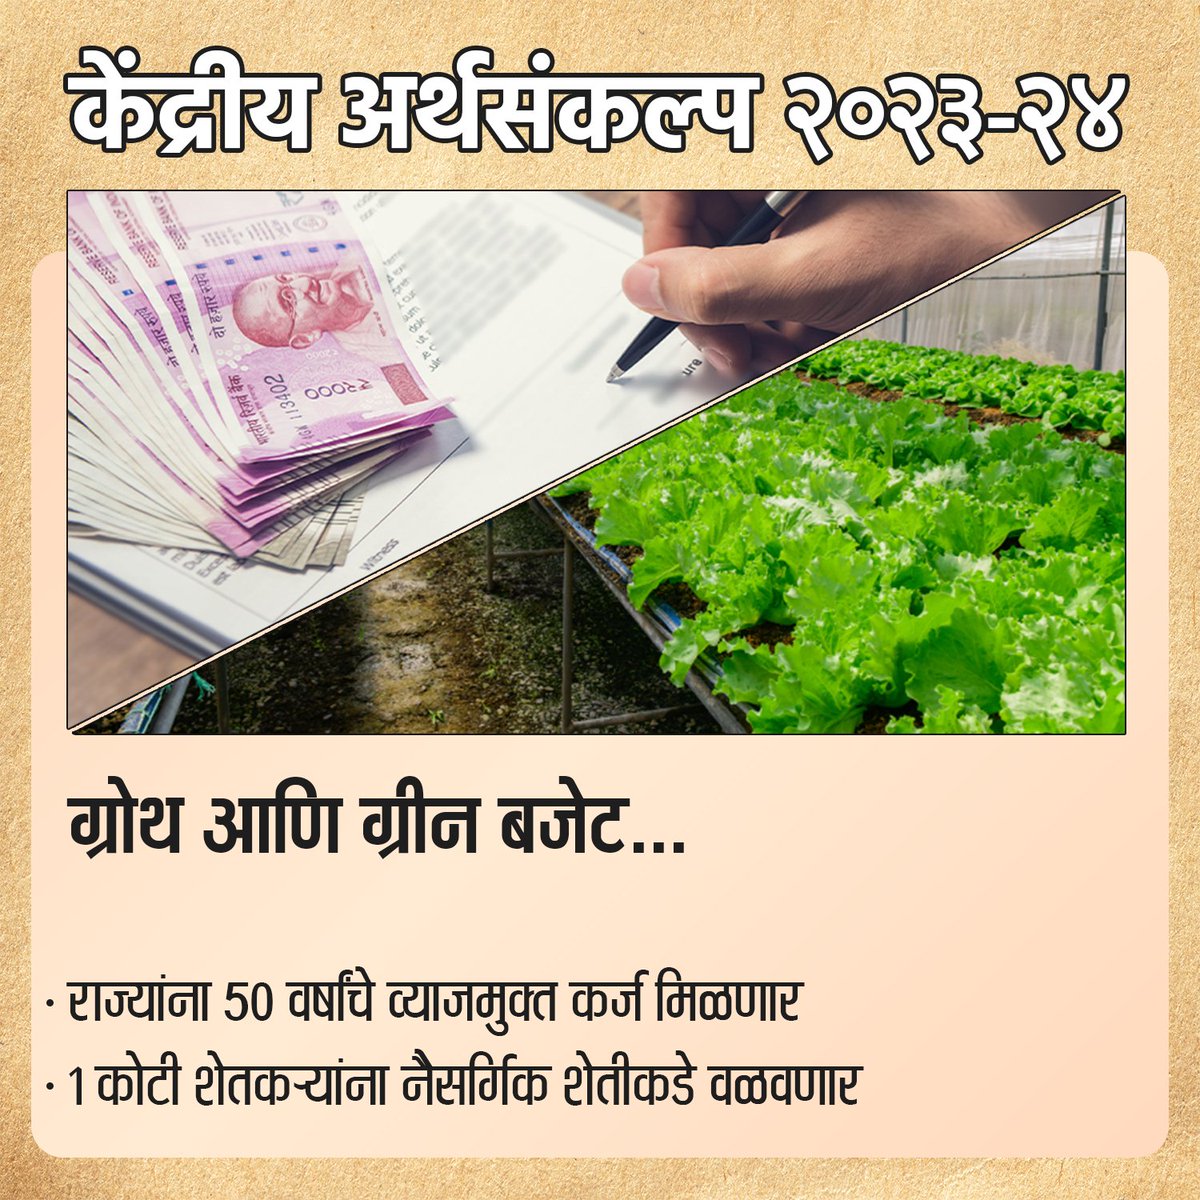 उद्योजकांना 10 वर्षासाठी करसवलत
.
.
#Budget2023  #BudgetSession2023  #Budget #Maharashtra #maharashtratoday